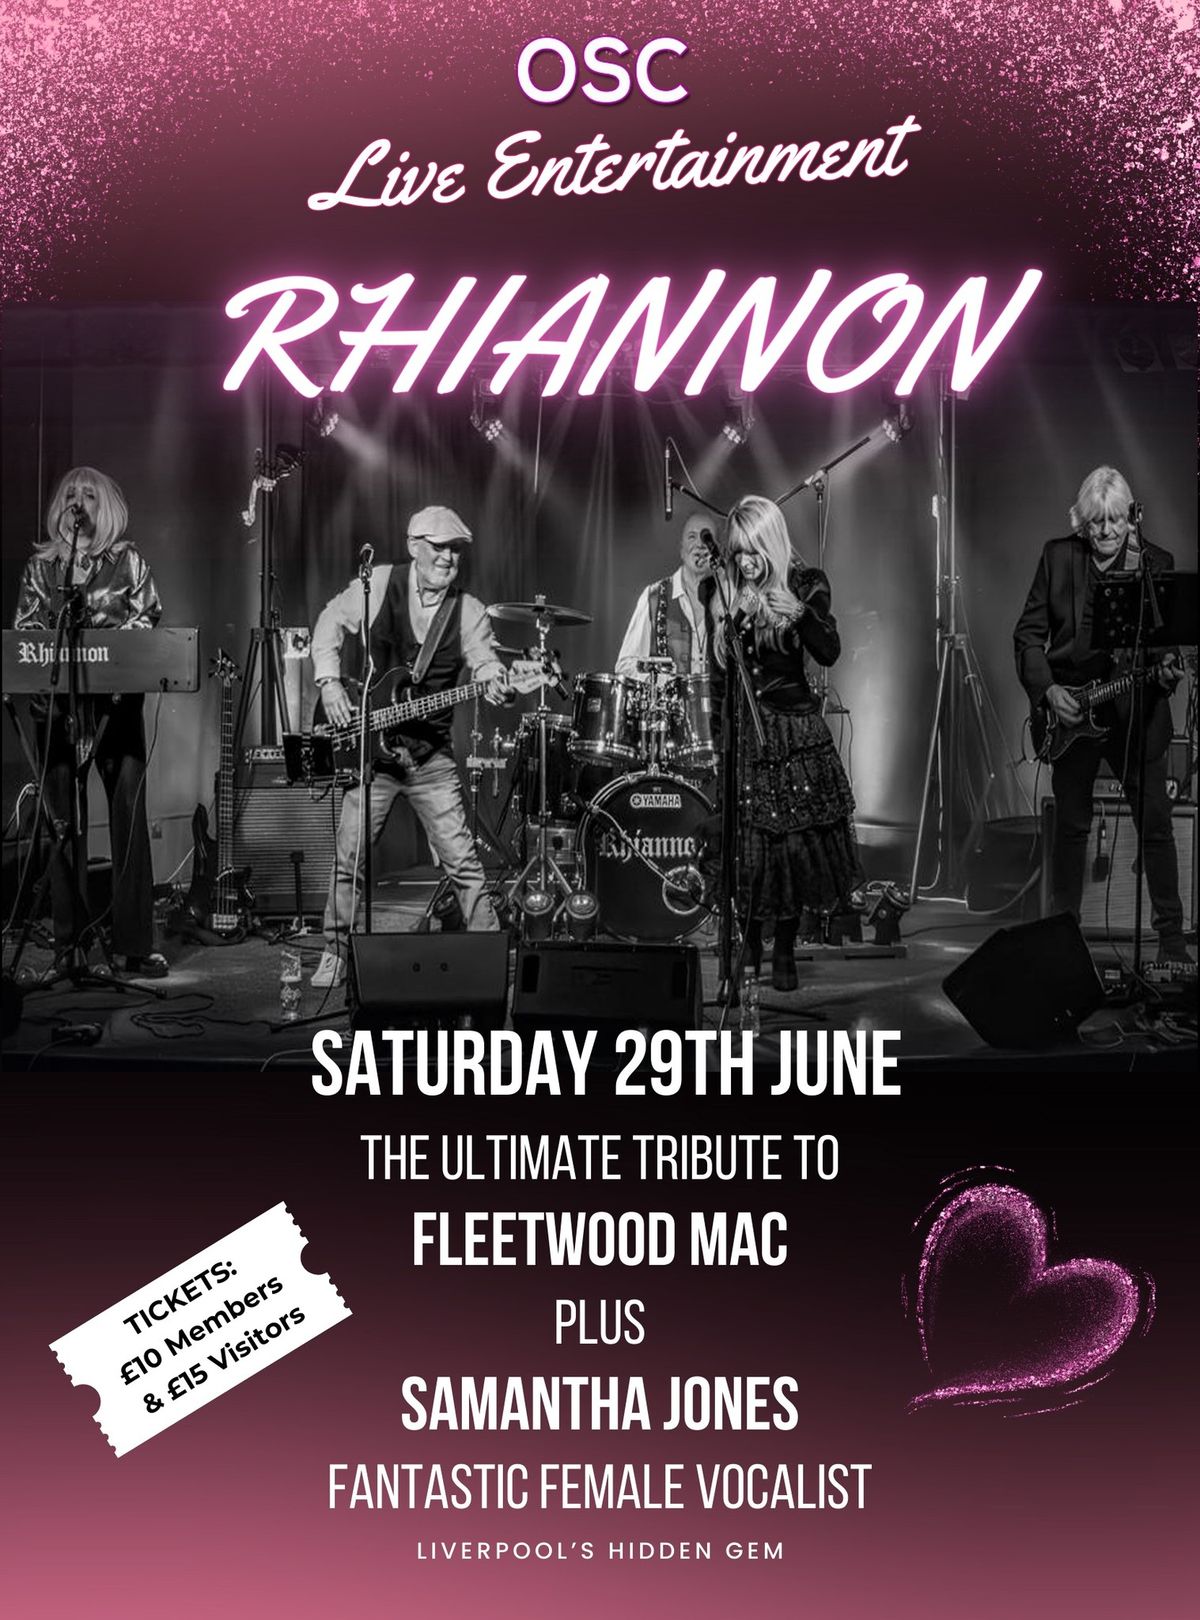 The Ultimate Tribute to Fleetwood Mac \u2018Rhiannon\u2019 Plus Samantha Jones